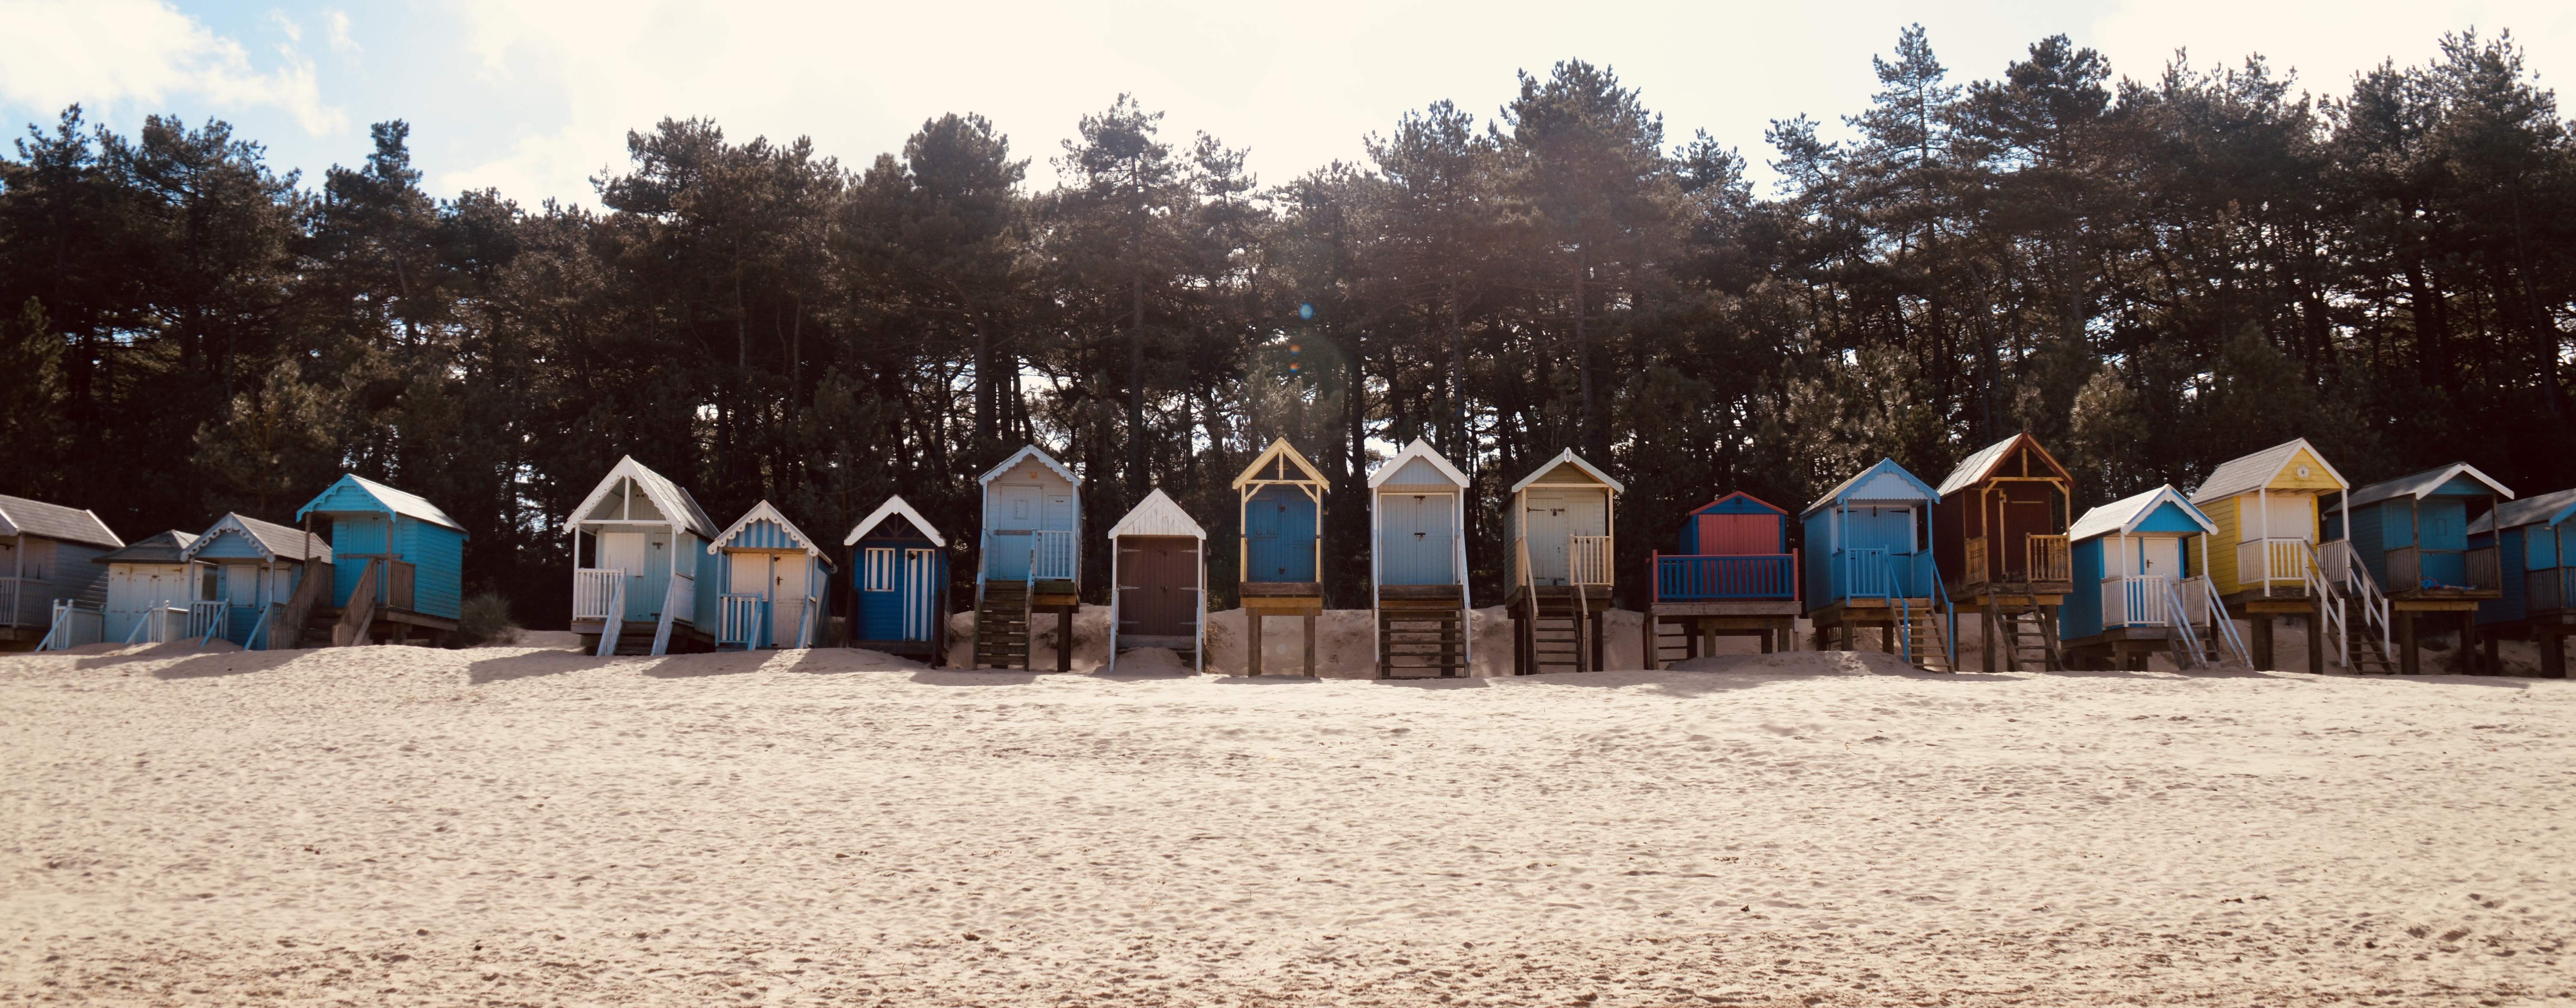 Beach Houses on Holkam Beach, UK